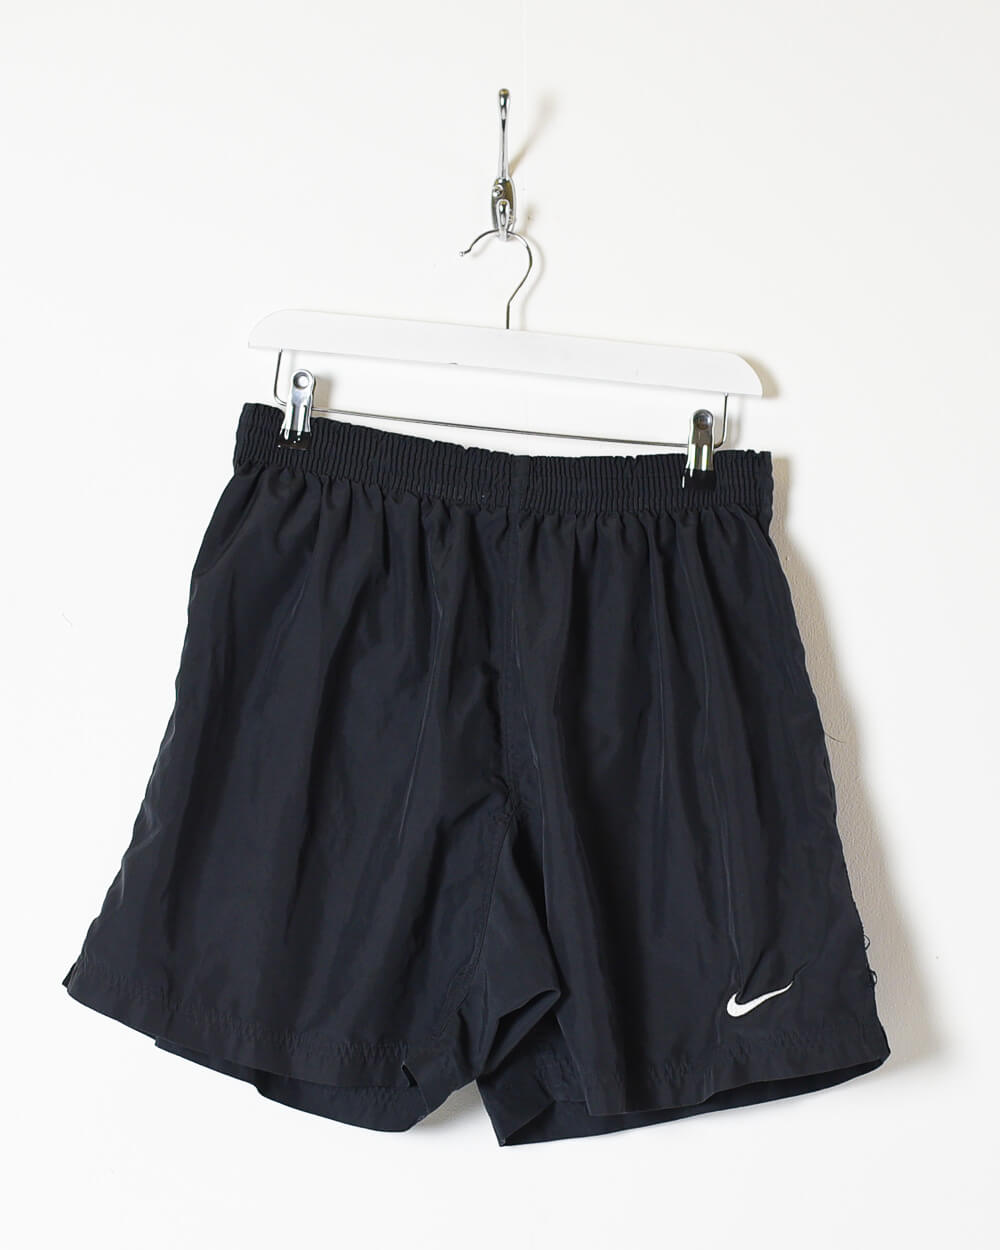 Black Nike Shorts - W34